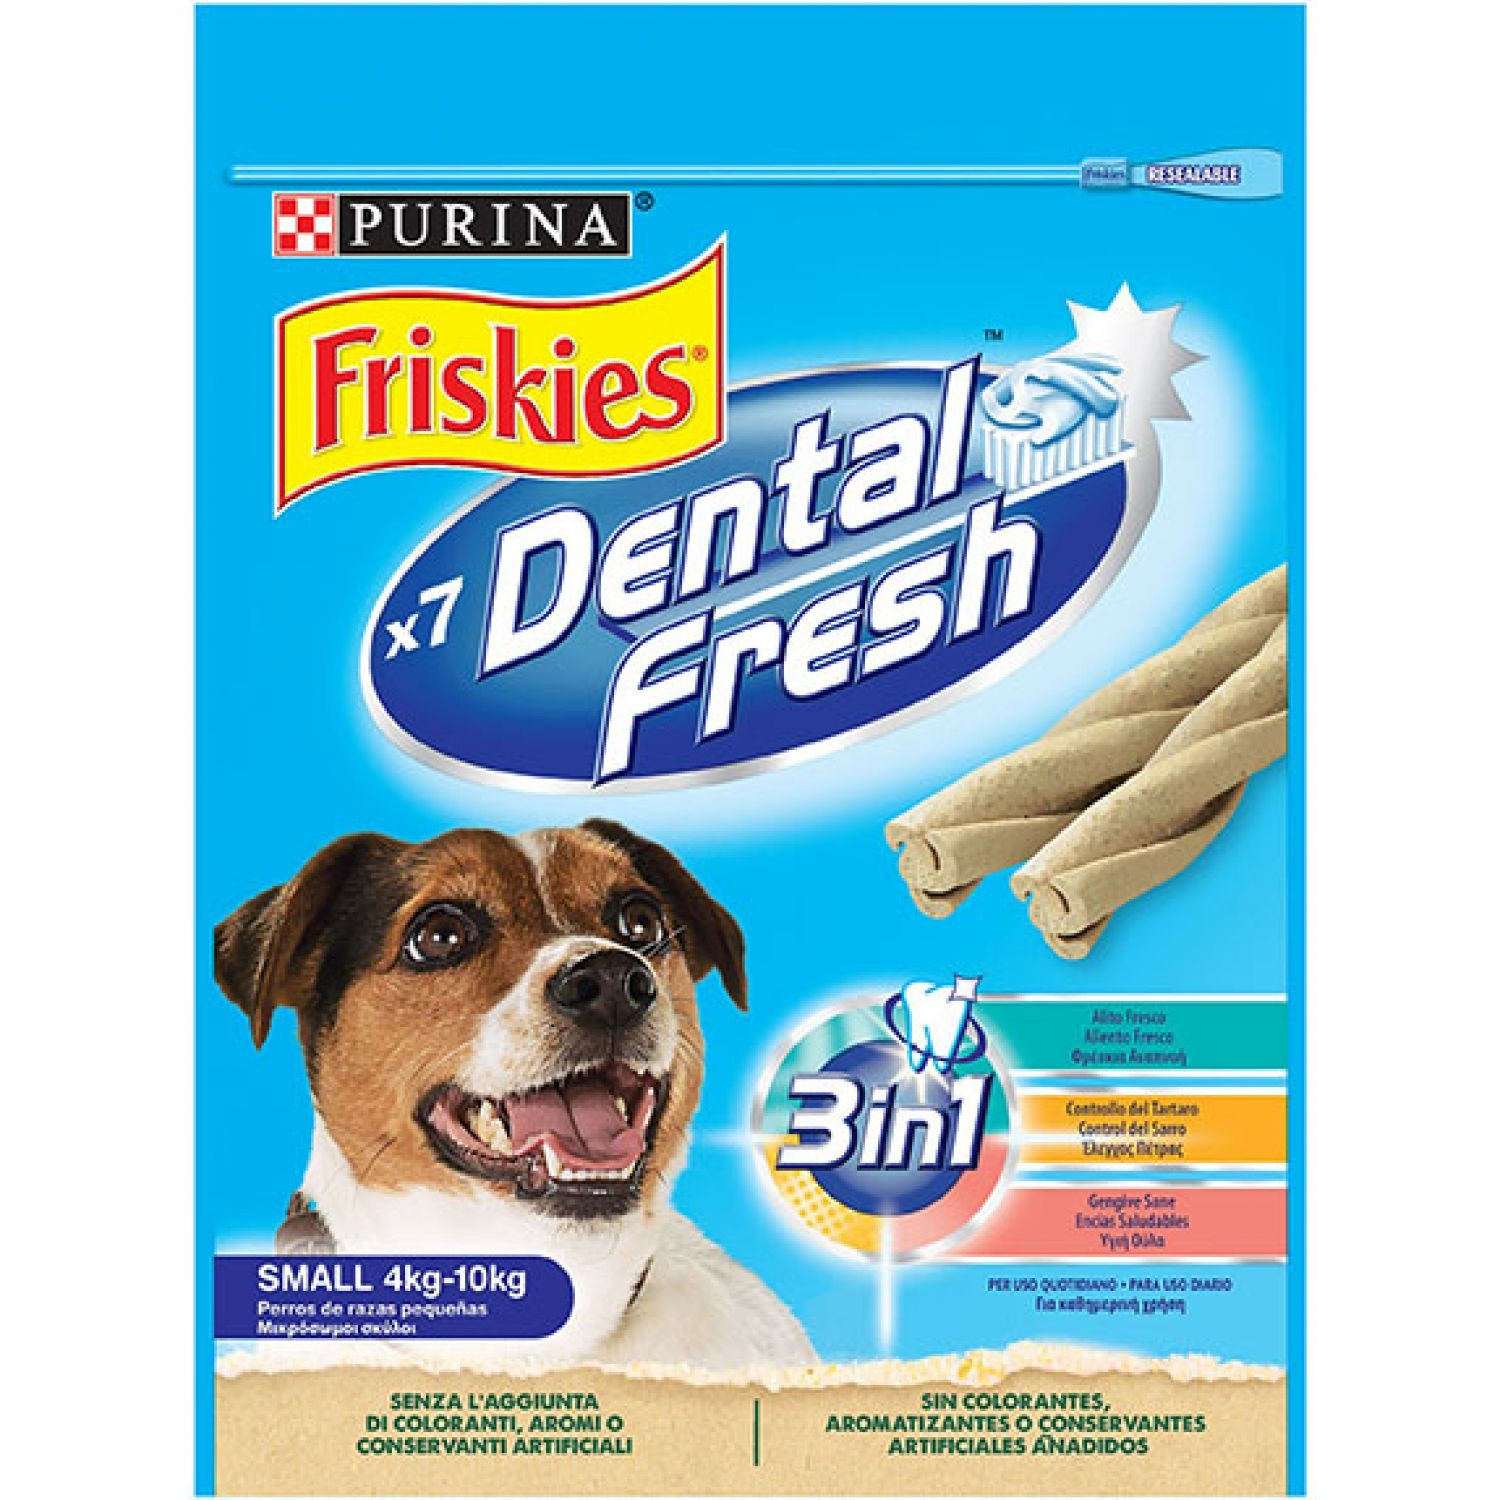 Snack Friskies Dental Fresh alla menta per piccoli cani